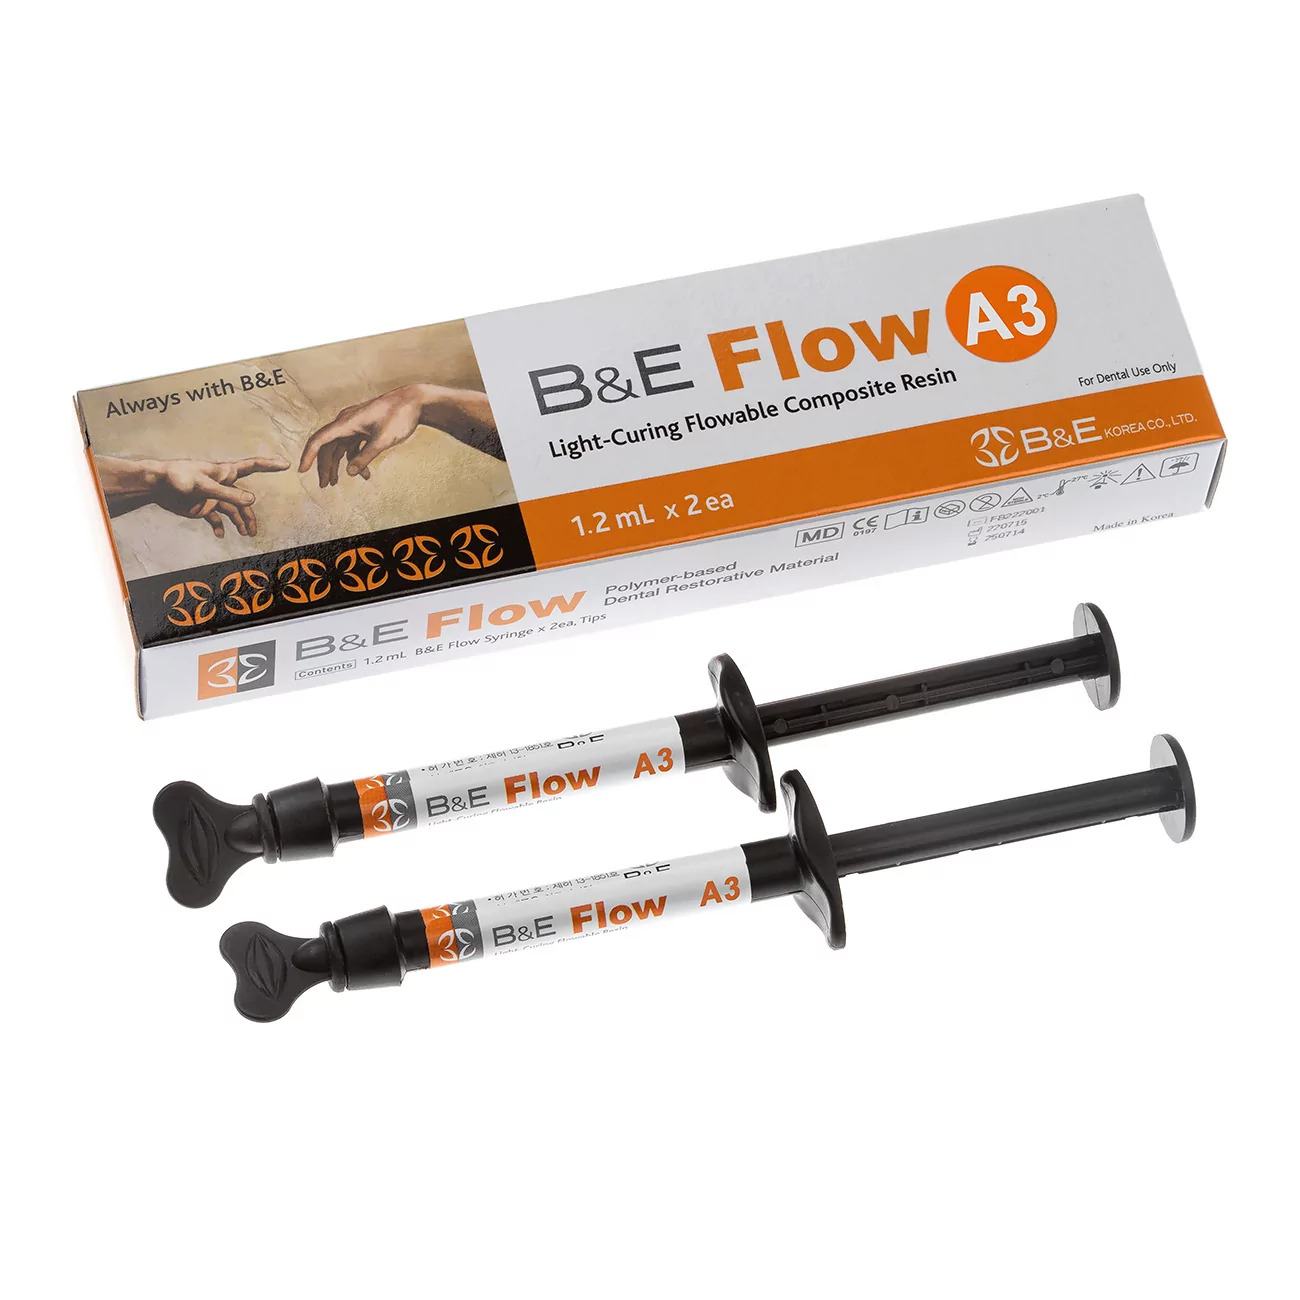 B&E Flow цвет A3 шприц 2гр.х2шт. Текучий светоотверждаемый композит, B&E Korea